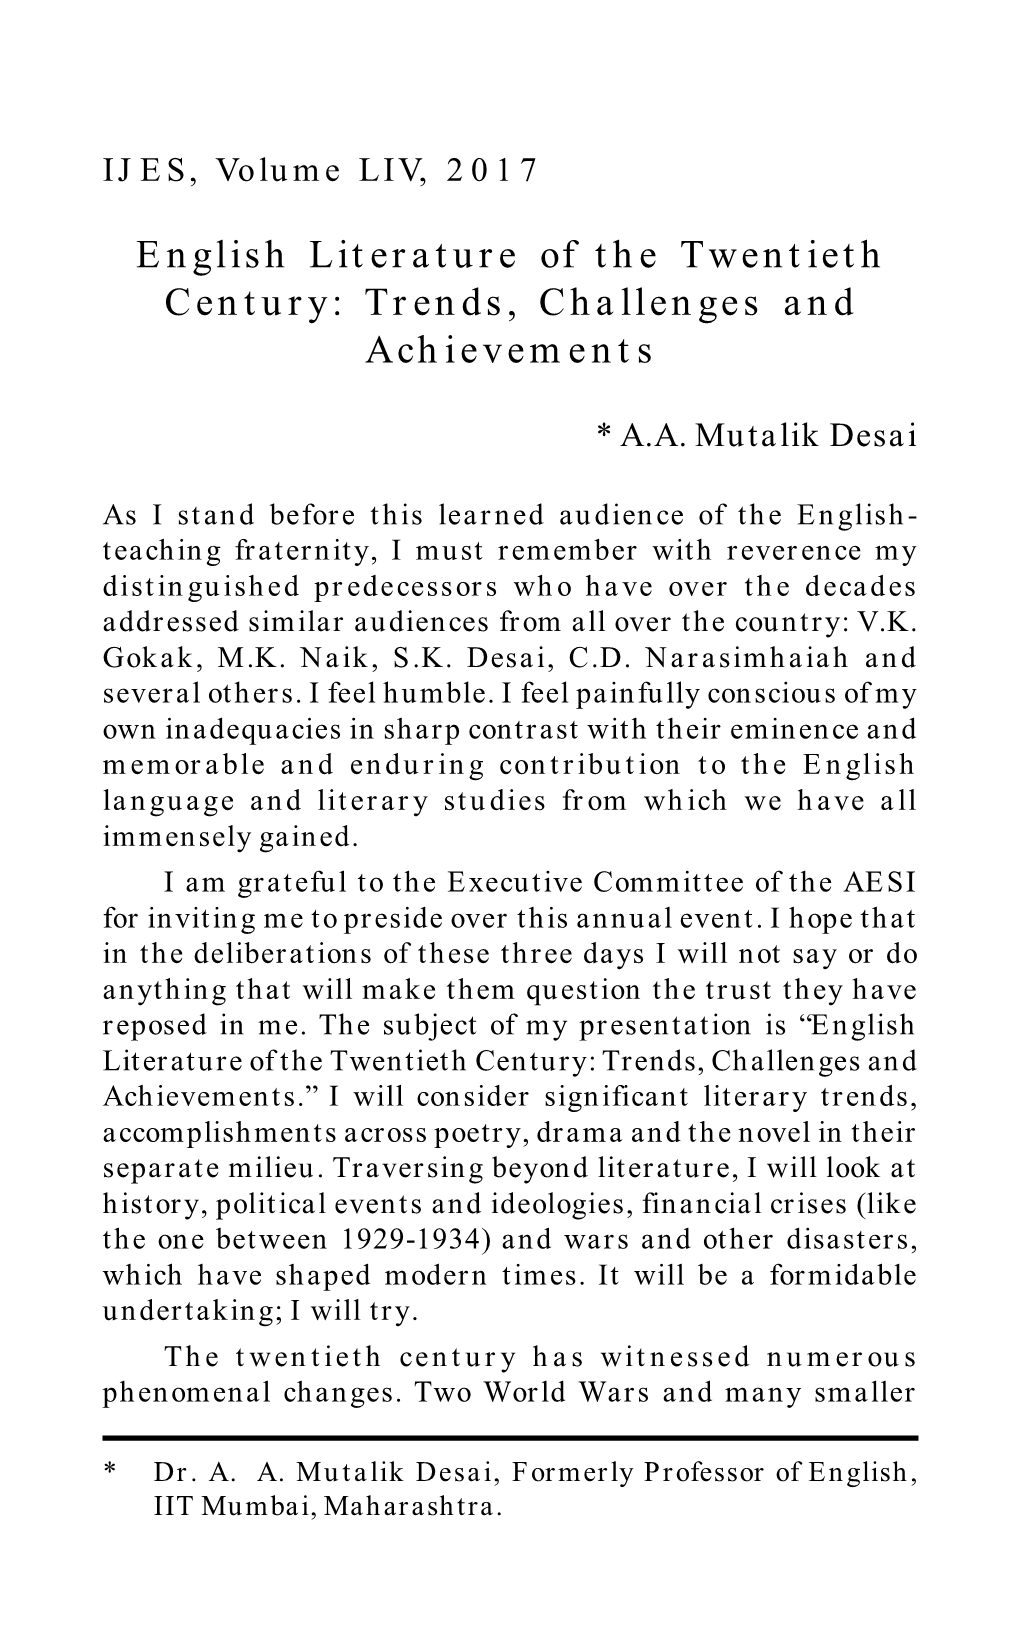 English Literature of the Twentieth Century: Trends, Challenges and Achievements